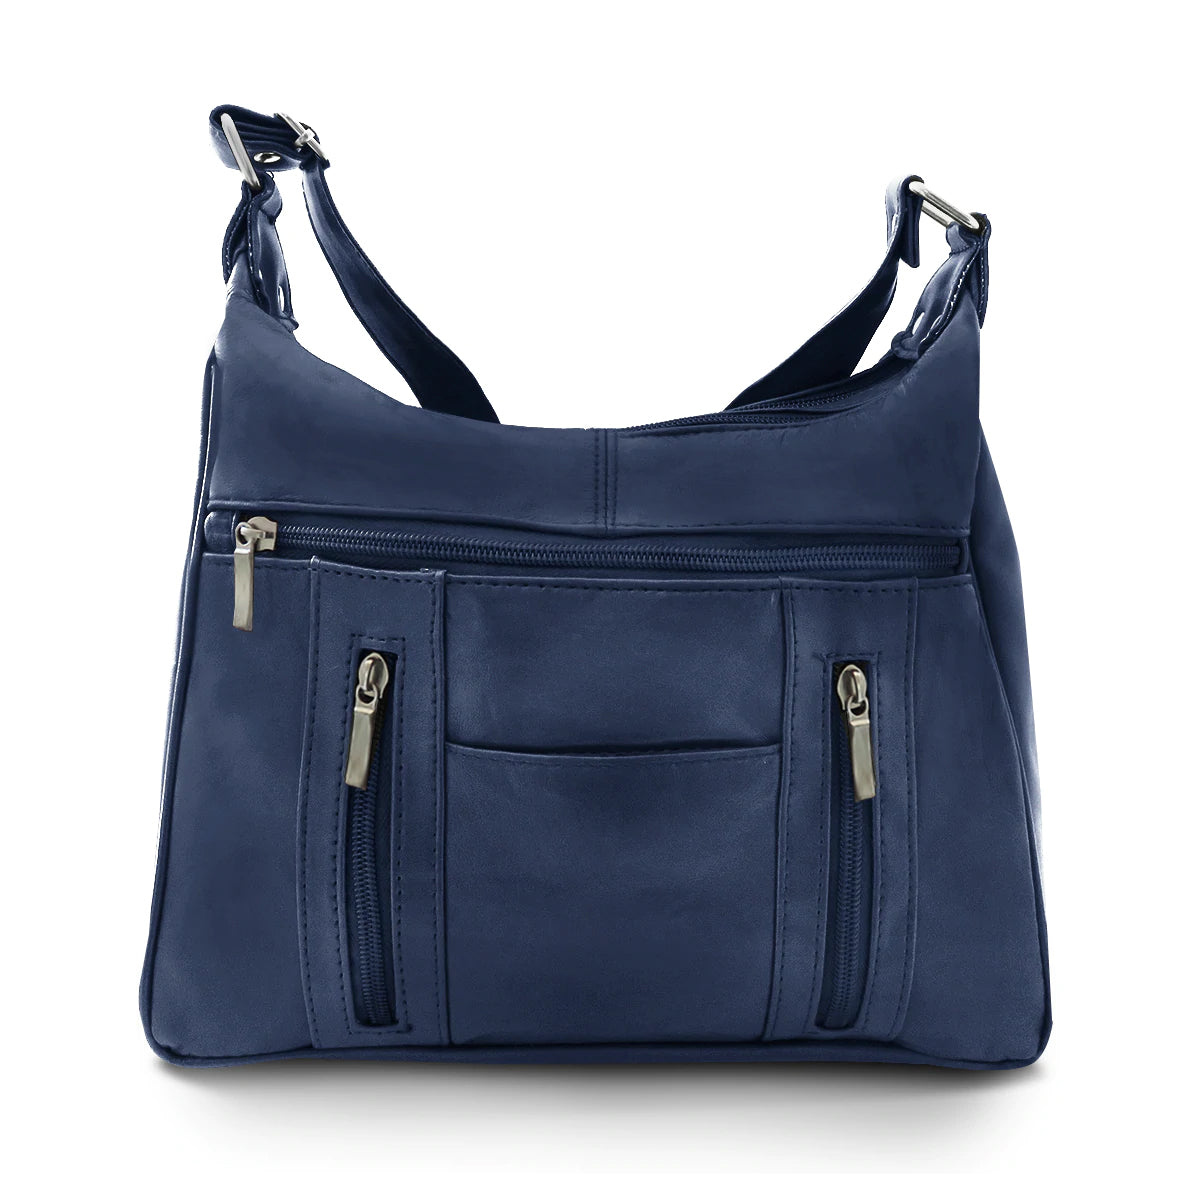 Amazon.com: Navy Leather Handbag